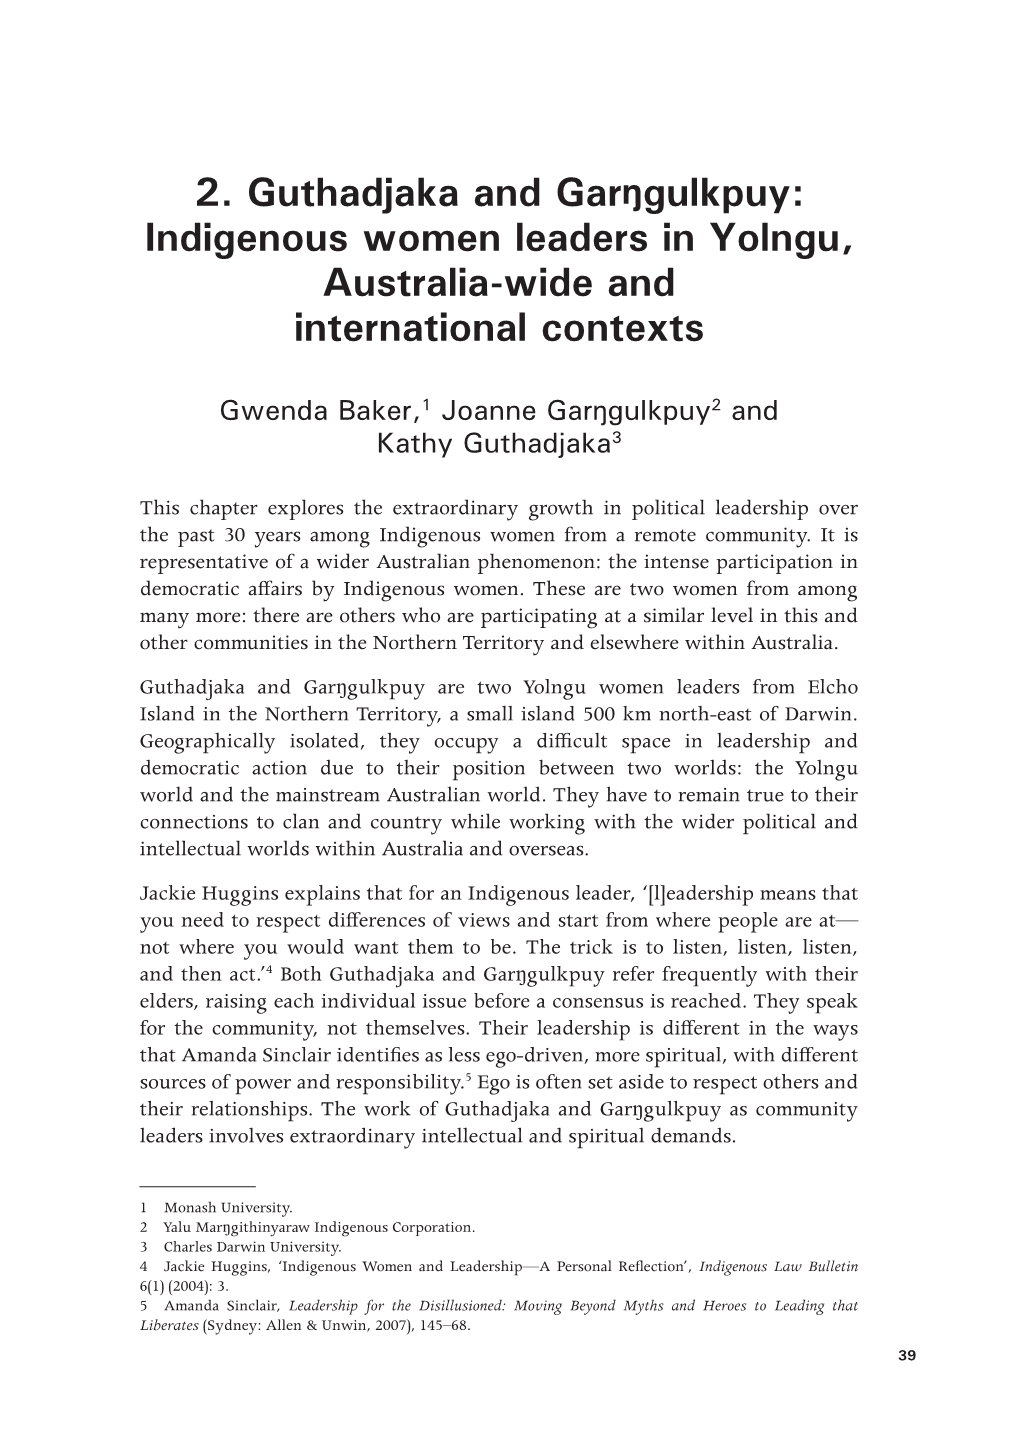 Indigenous Women Leaders in Yolngu, Australia-Wide and International Contexts